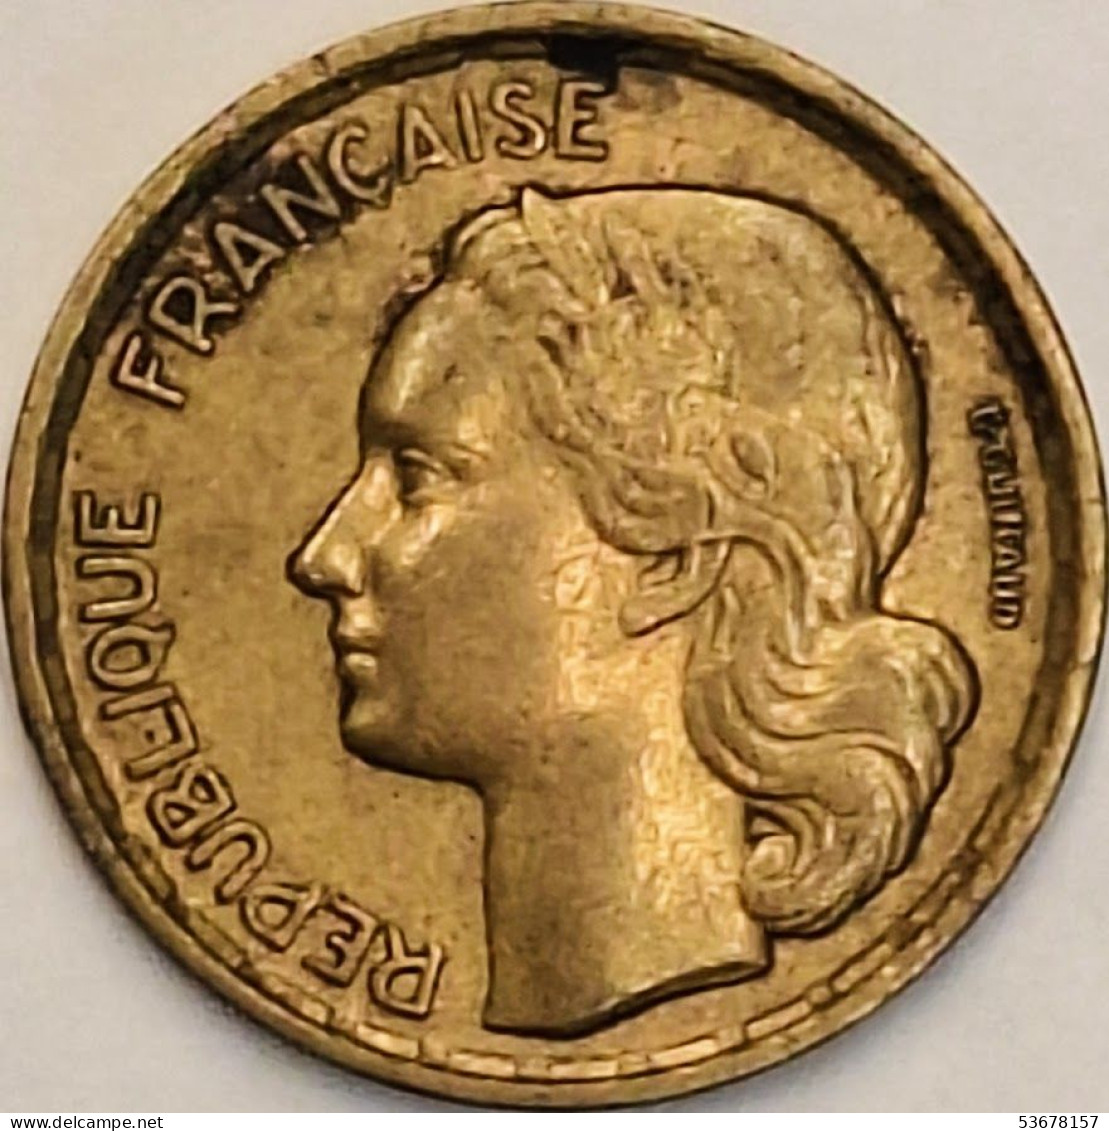 France - 10 Francs 1954 B, KM# 915.2 (#4153) - 10 Francs